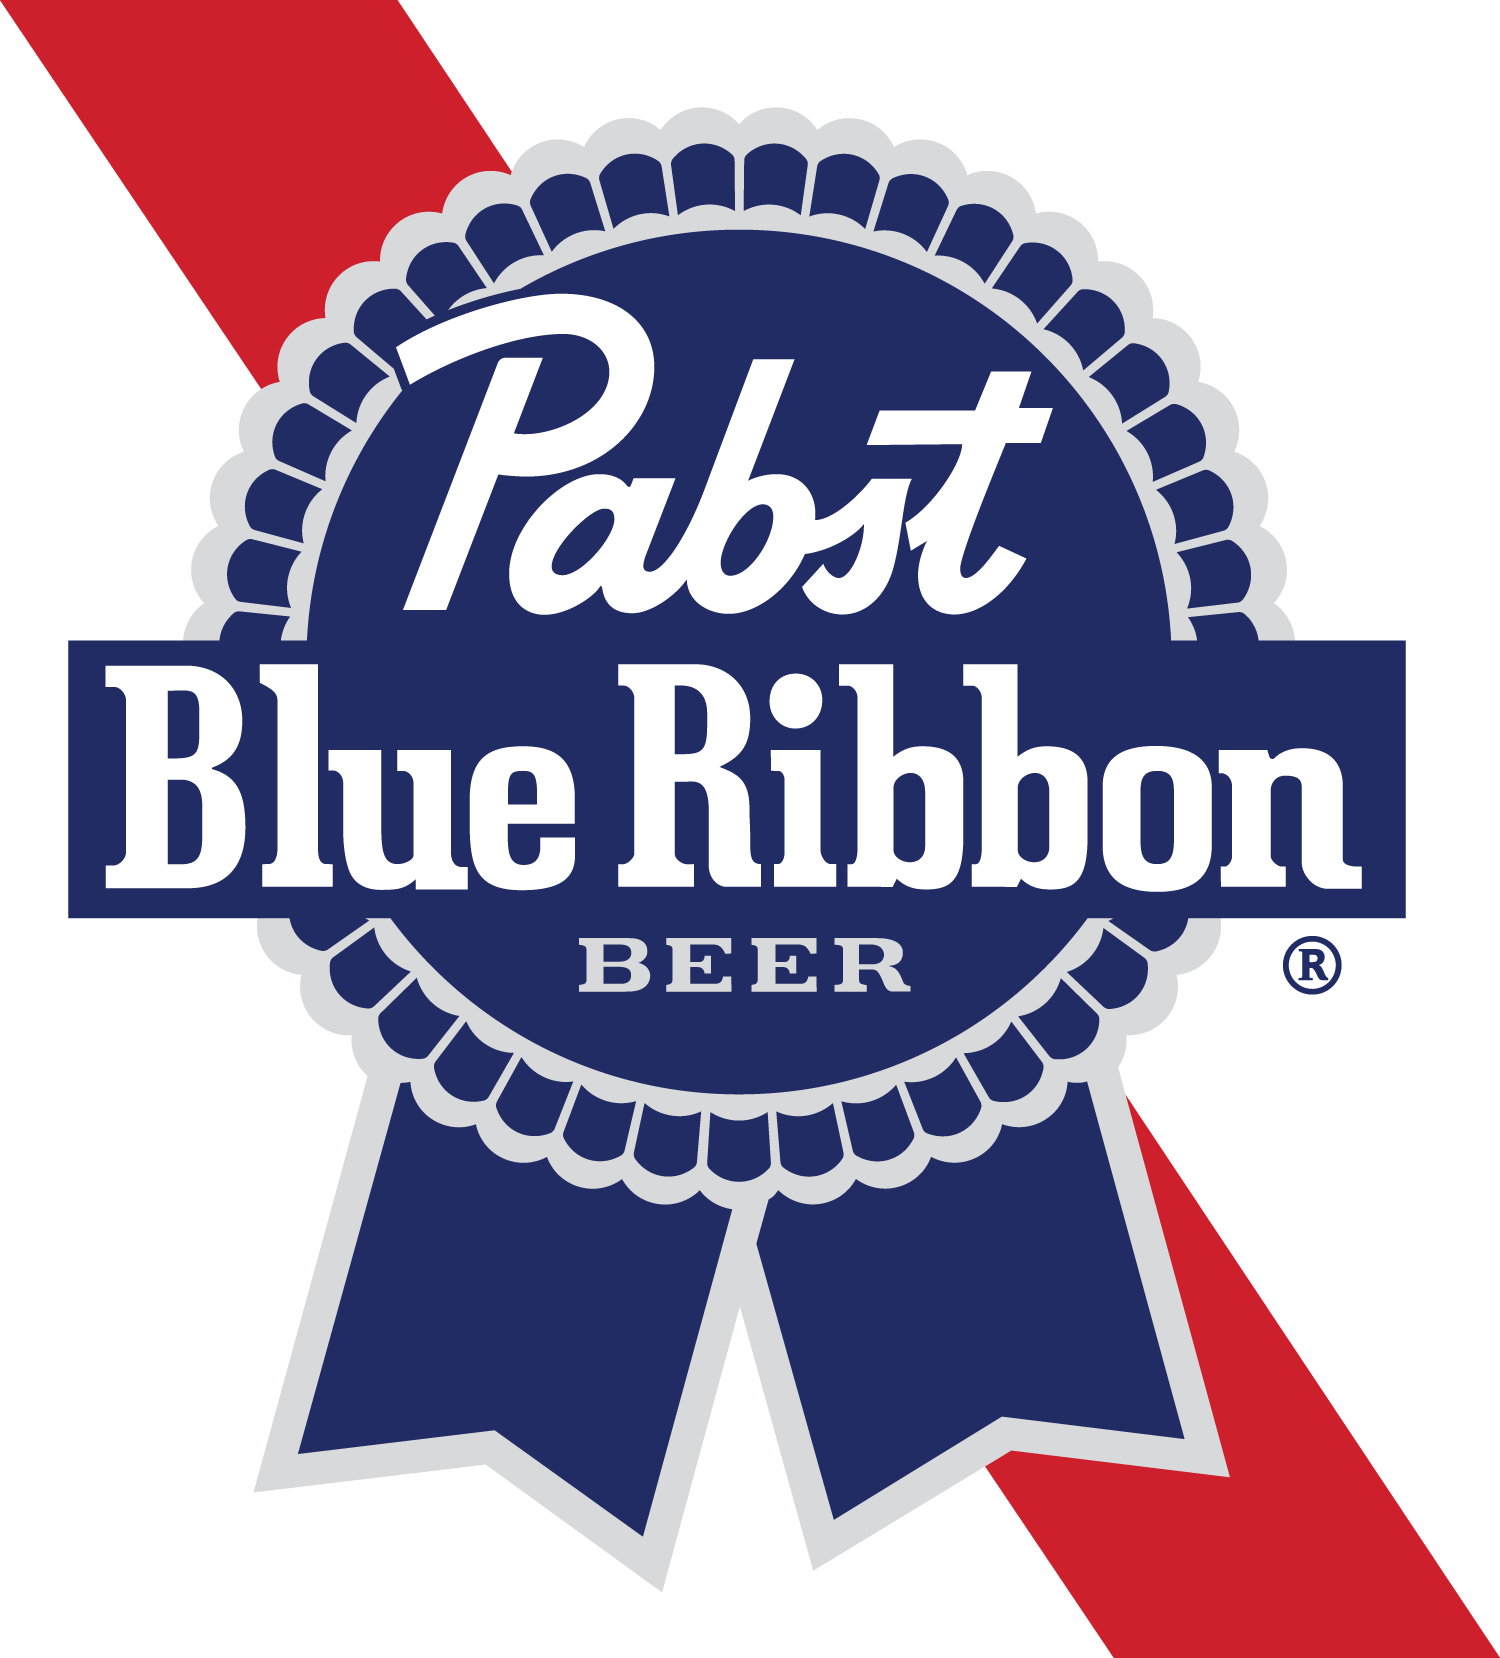 PabstBlueRibbon_Logo.png